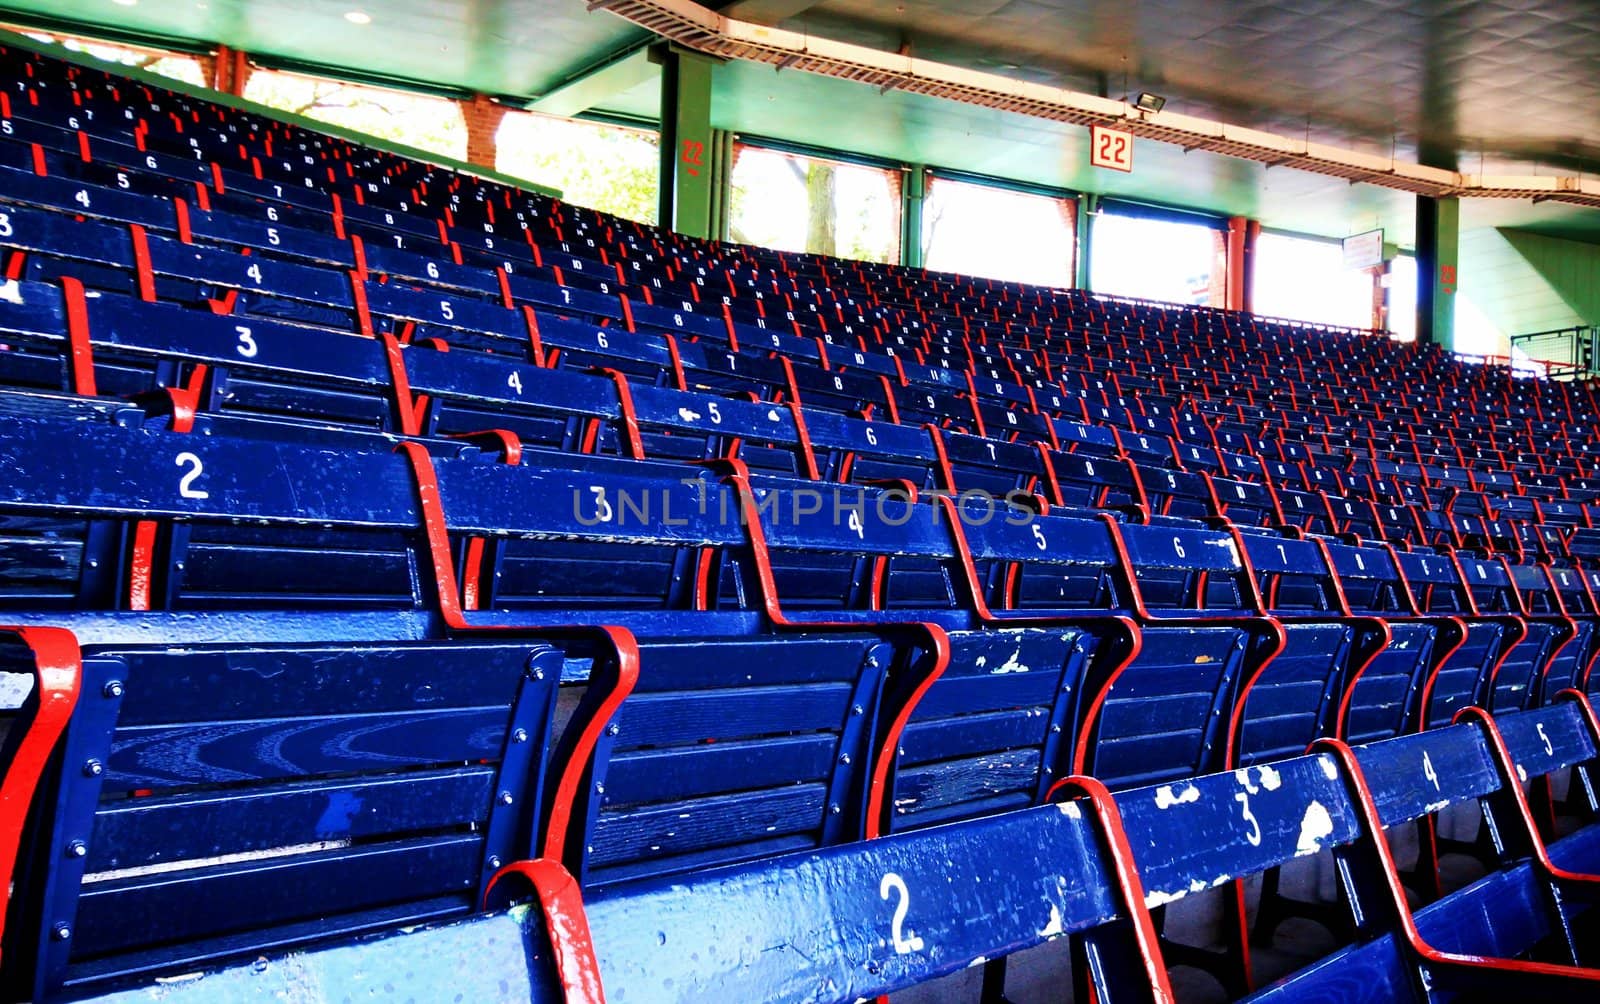 Original seats found at Fenway Park